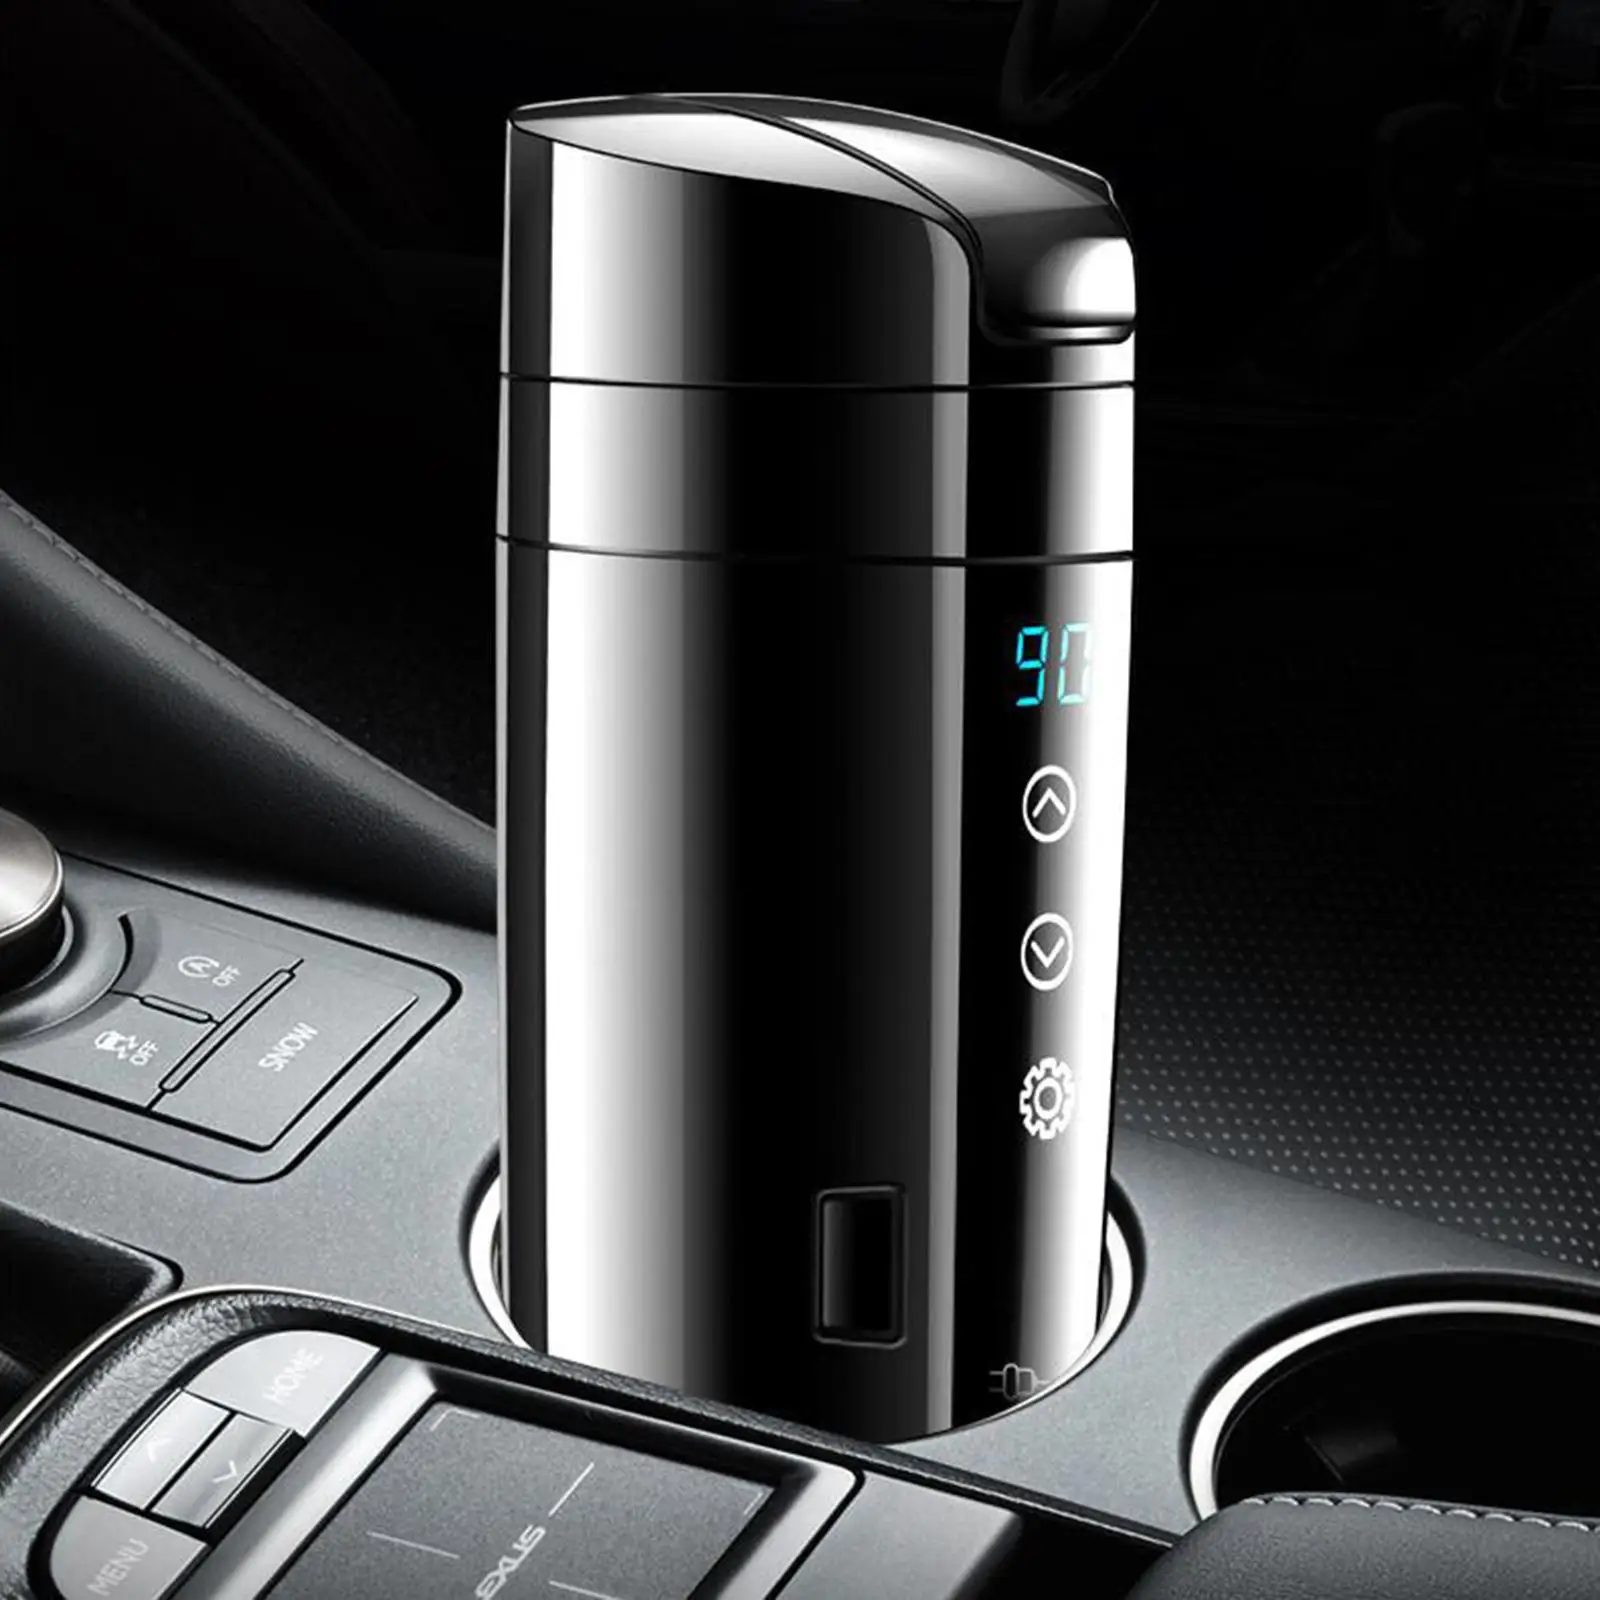 12V/24V Car Kettle Boiler Touch Enabled Intelligent for Coffee Travel